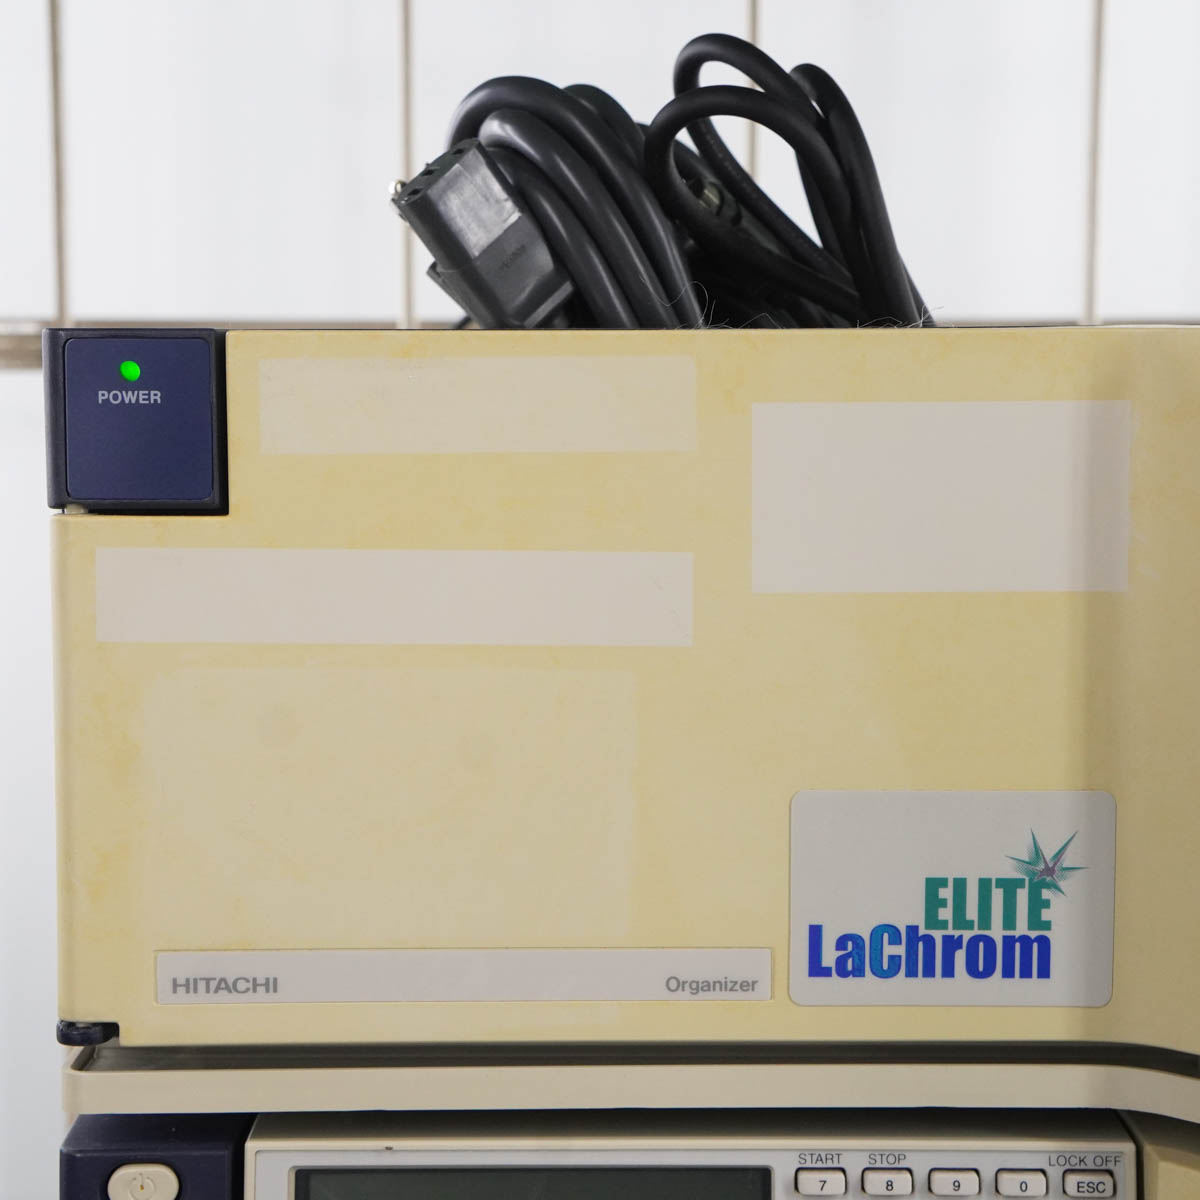 [DW]USED 8日保証 セット HITACHI L-2400 L-2130 L-2200 L-2300 Organizer HPLC ELITE LaChrom UV Detector Pump Autosampl...[04643-0011] - 8